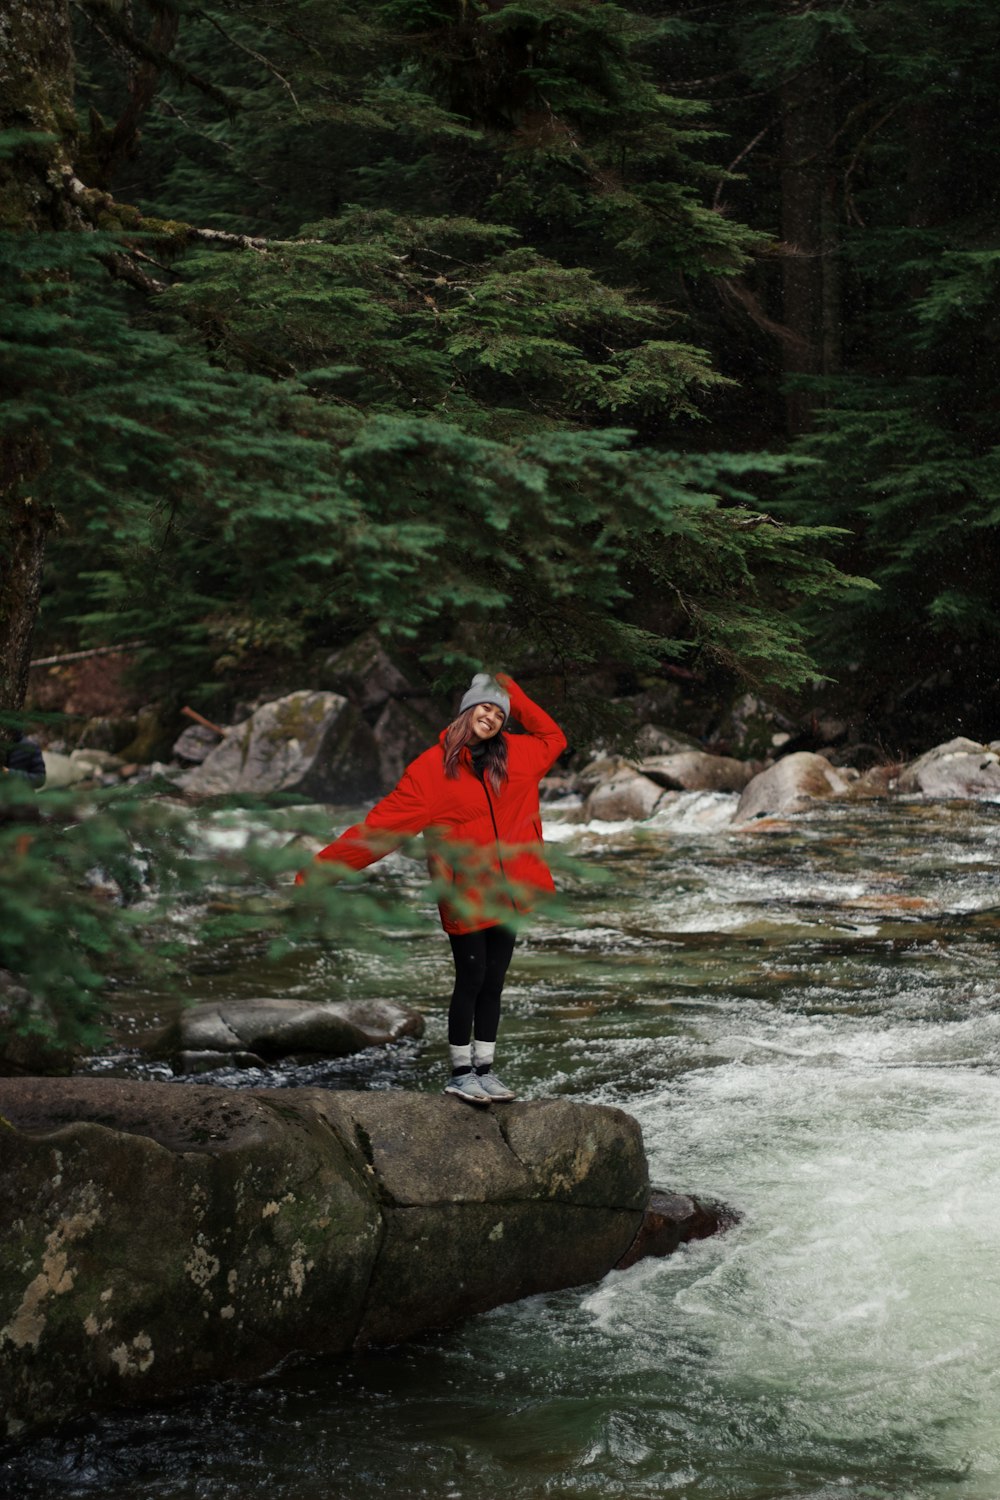 Una donna in una giacca rossa in piedi su una roccia in un fiume